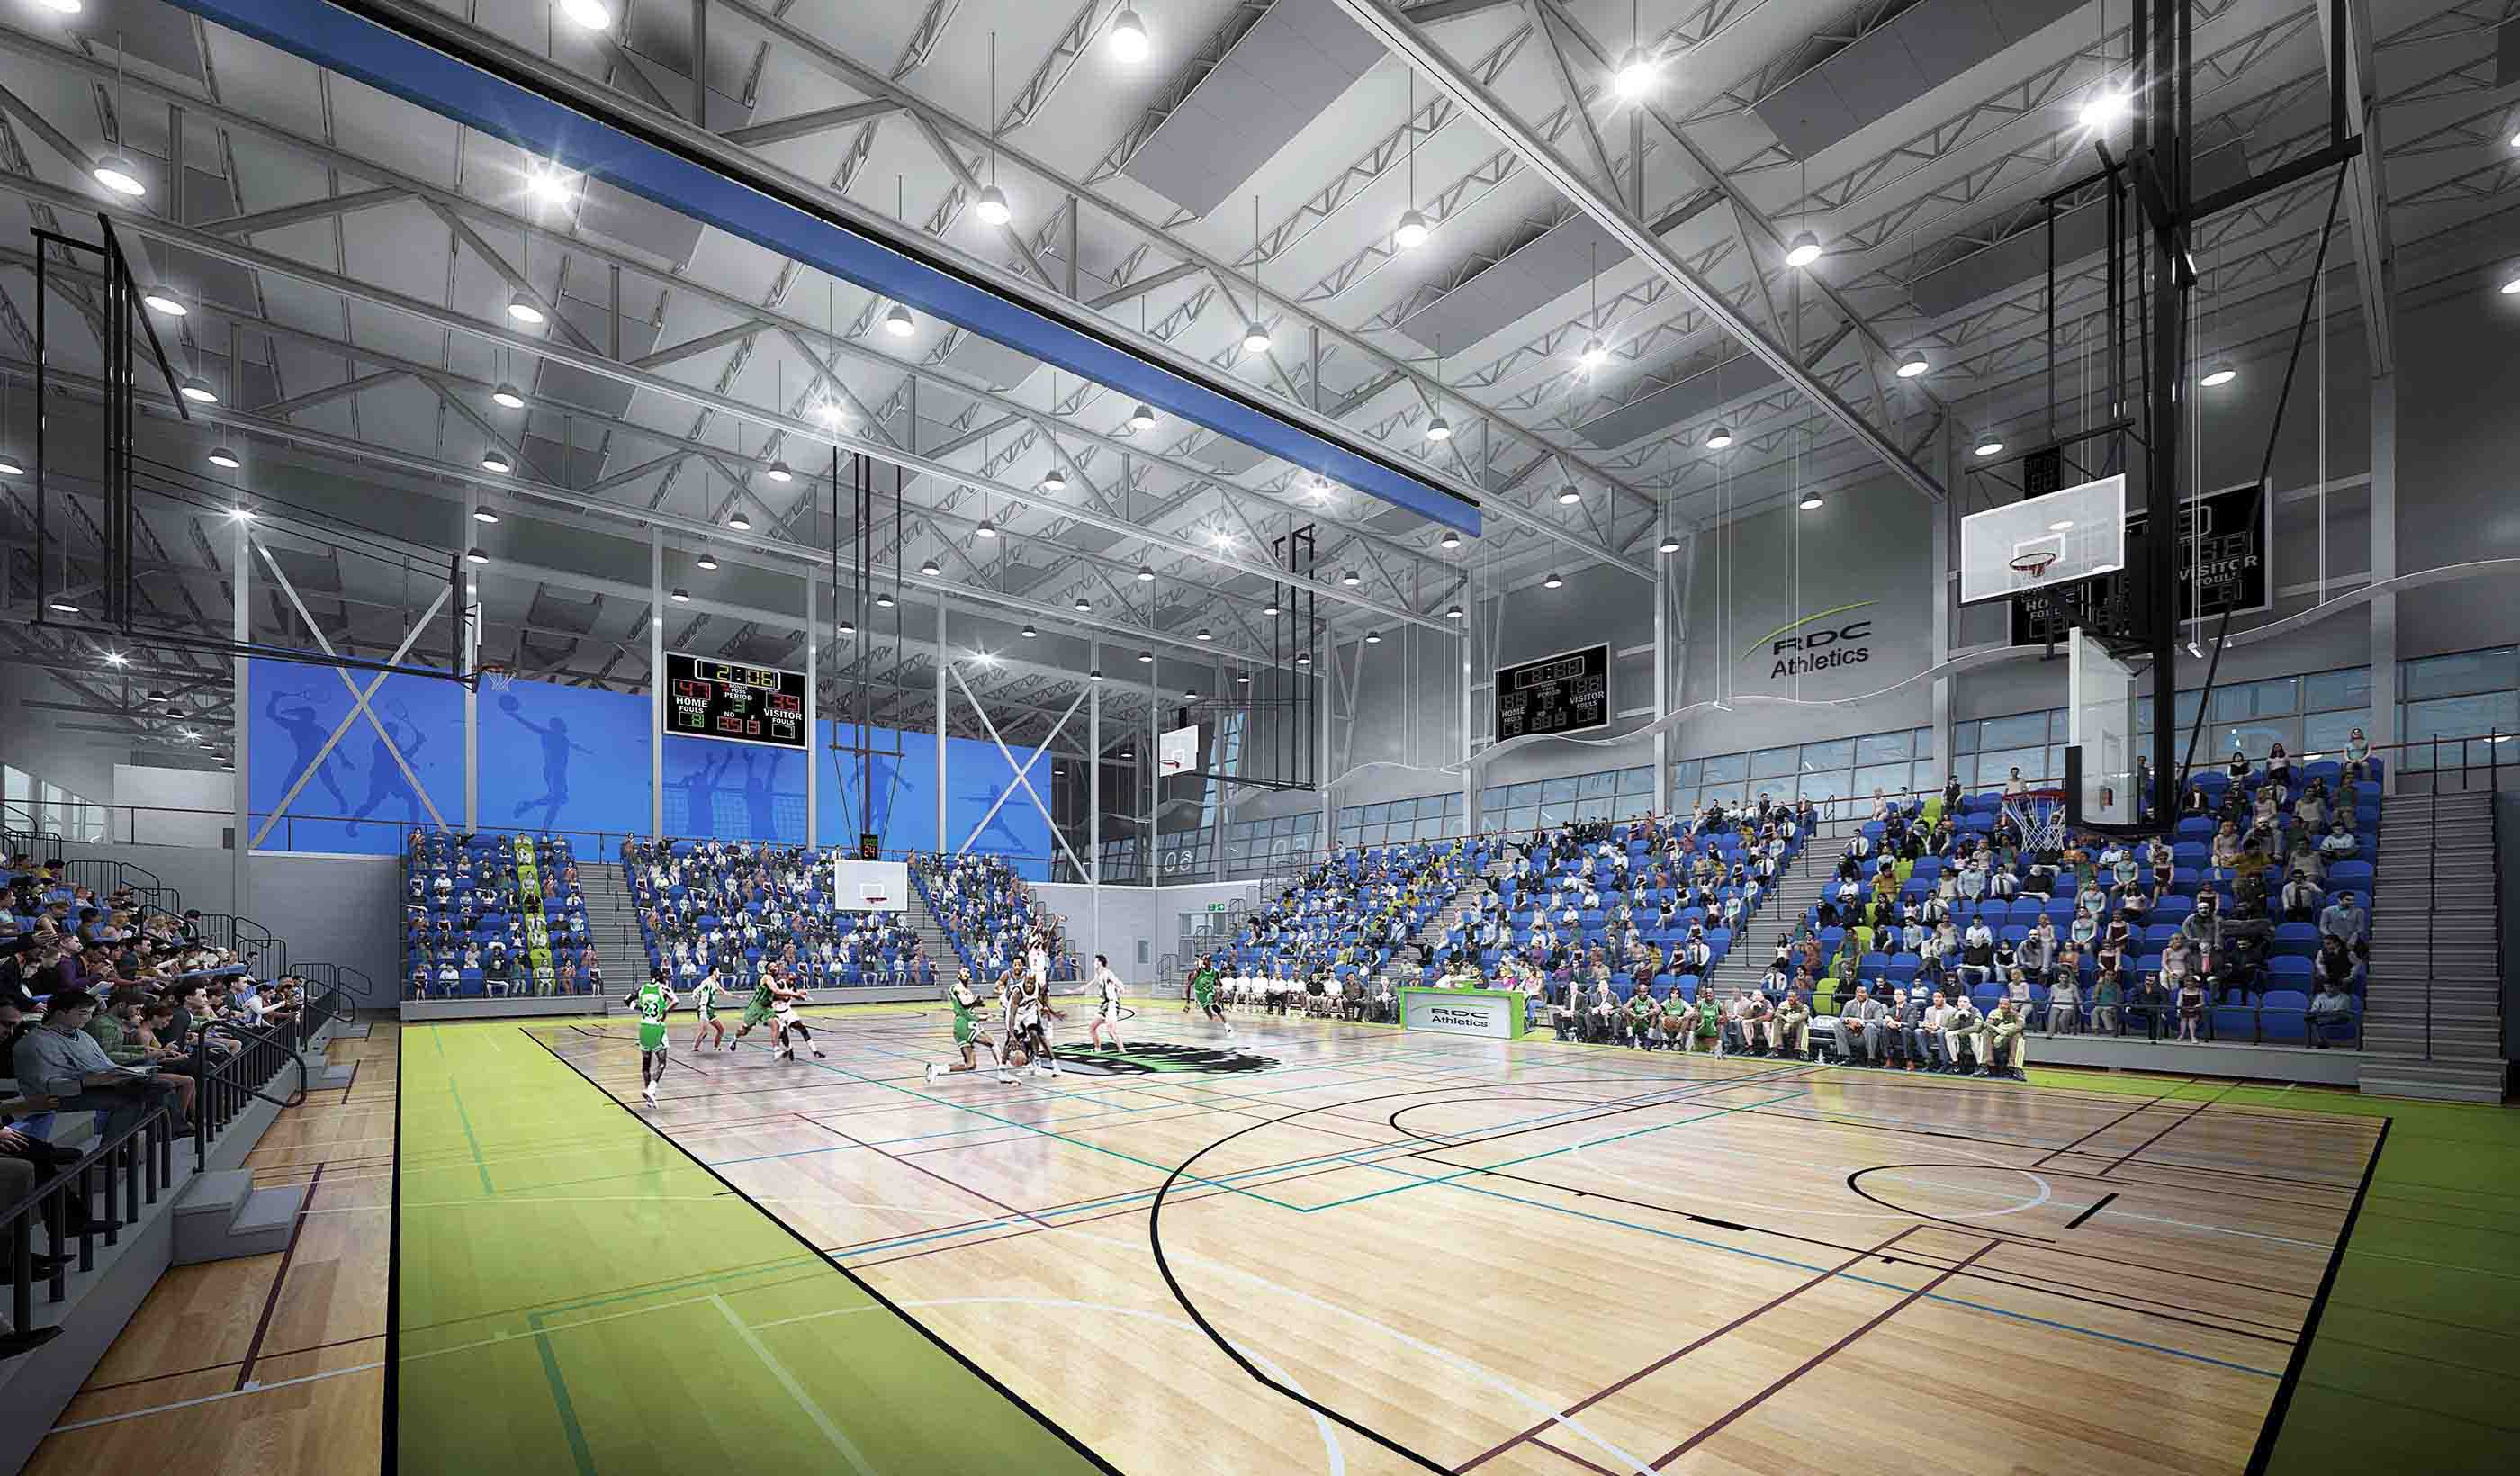 indoor sports facility design